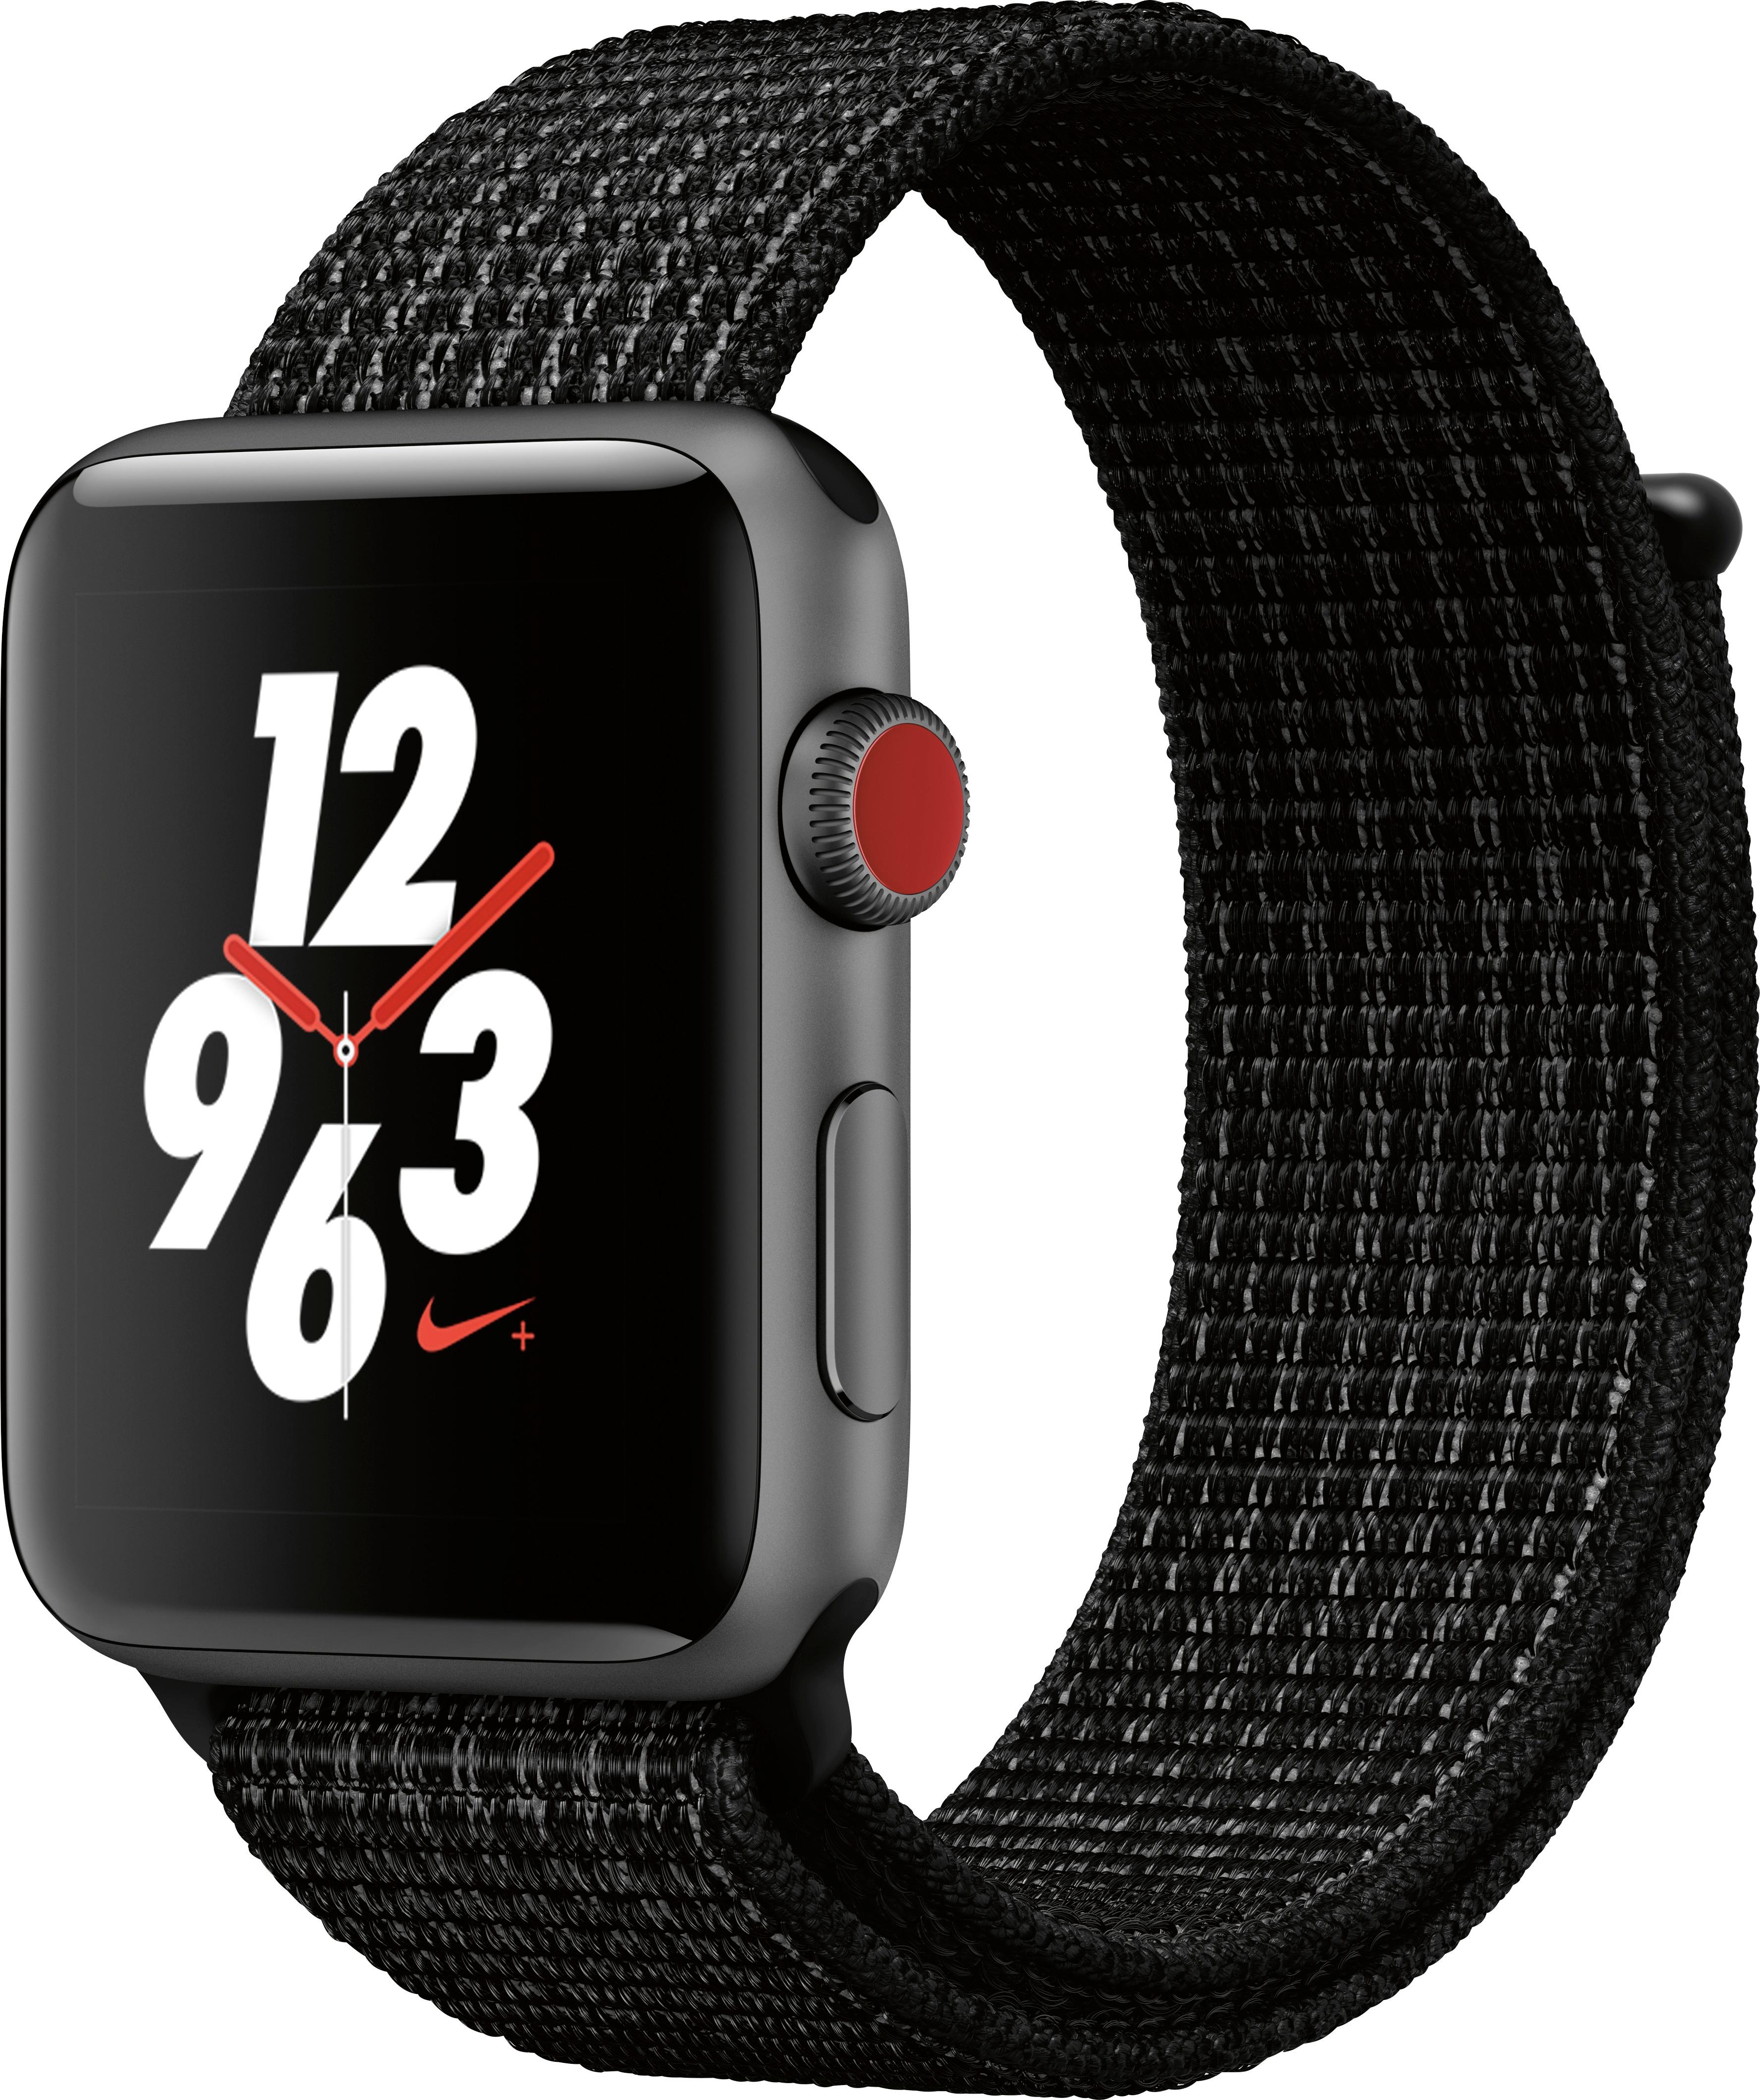 Apple Watch Series 3本体42mm /GPS+Cellular-